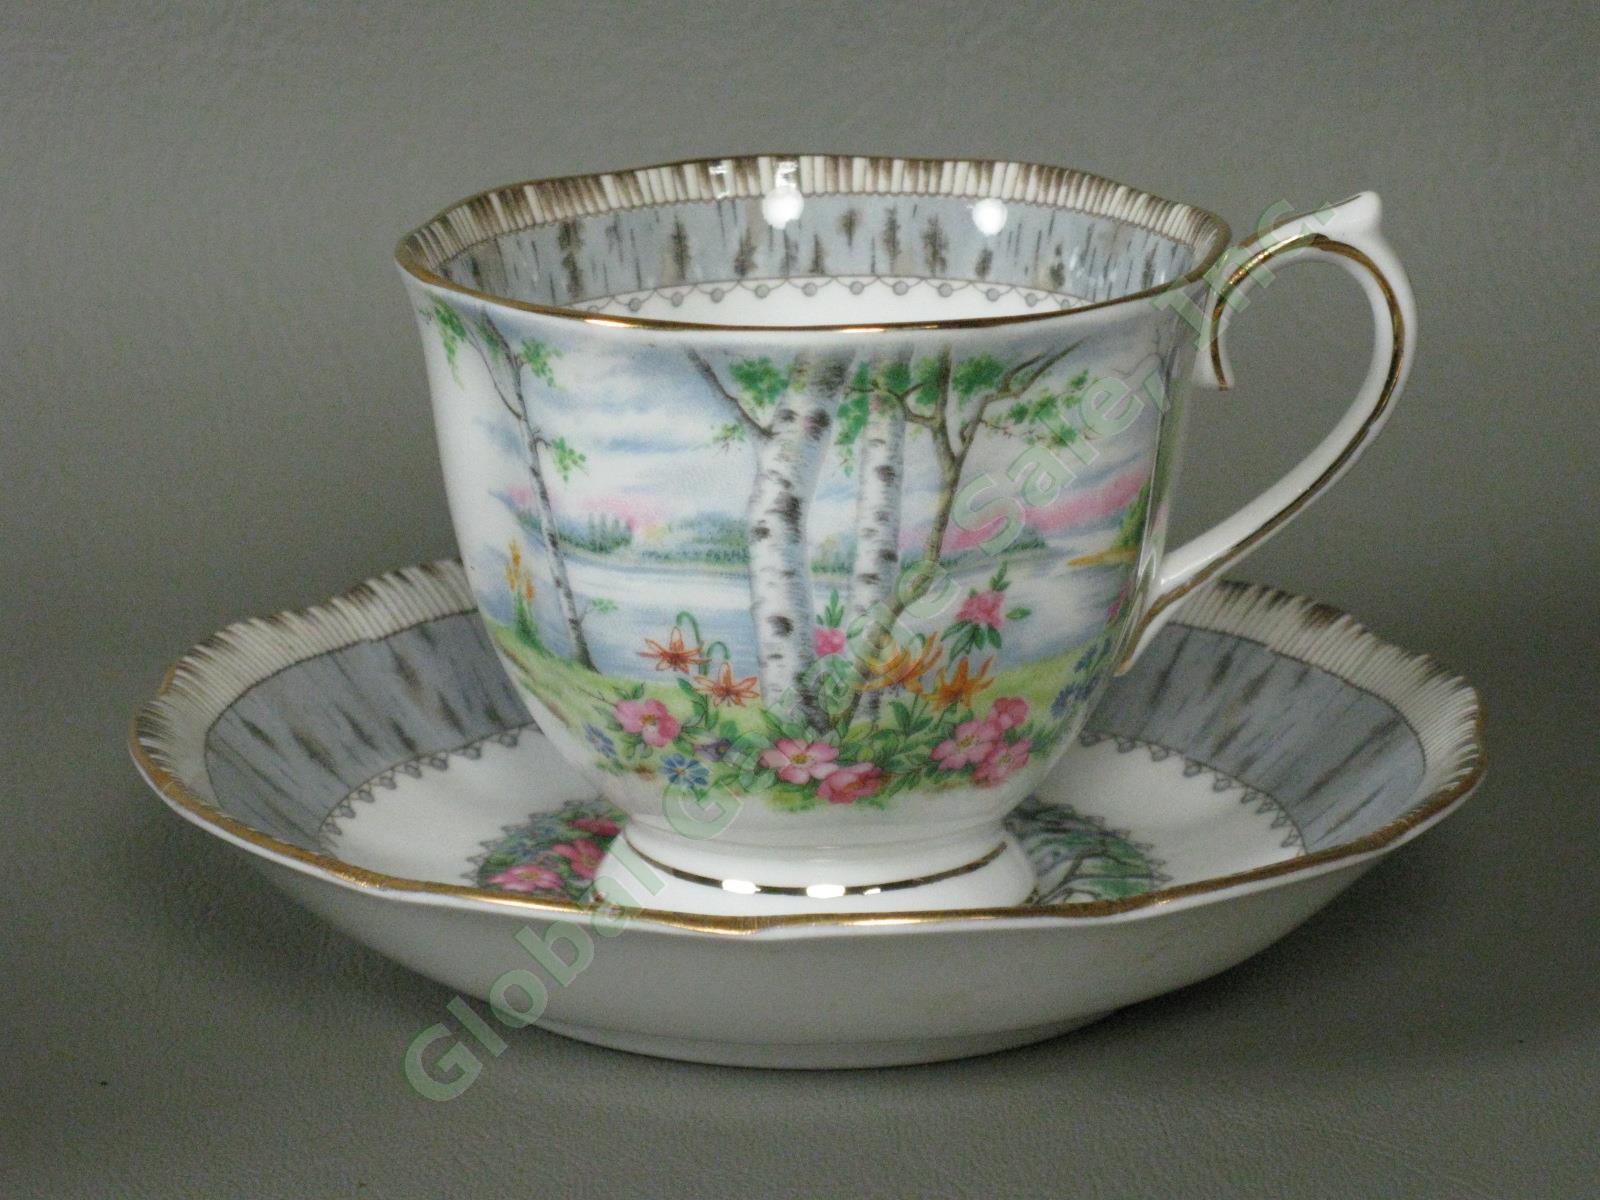 8 Vintage Royal Albert Silver Birch Bone China Teacups Tea Cups + Saucers Set NR 1